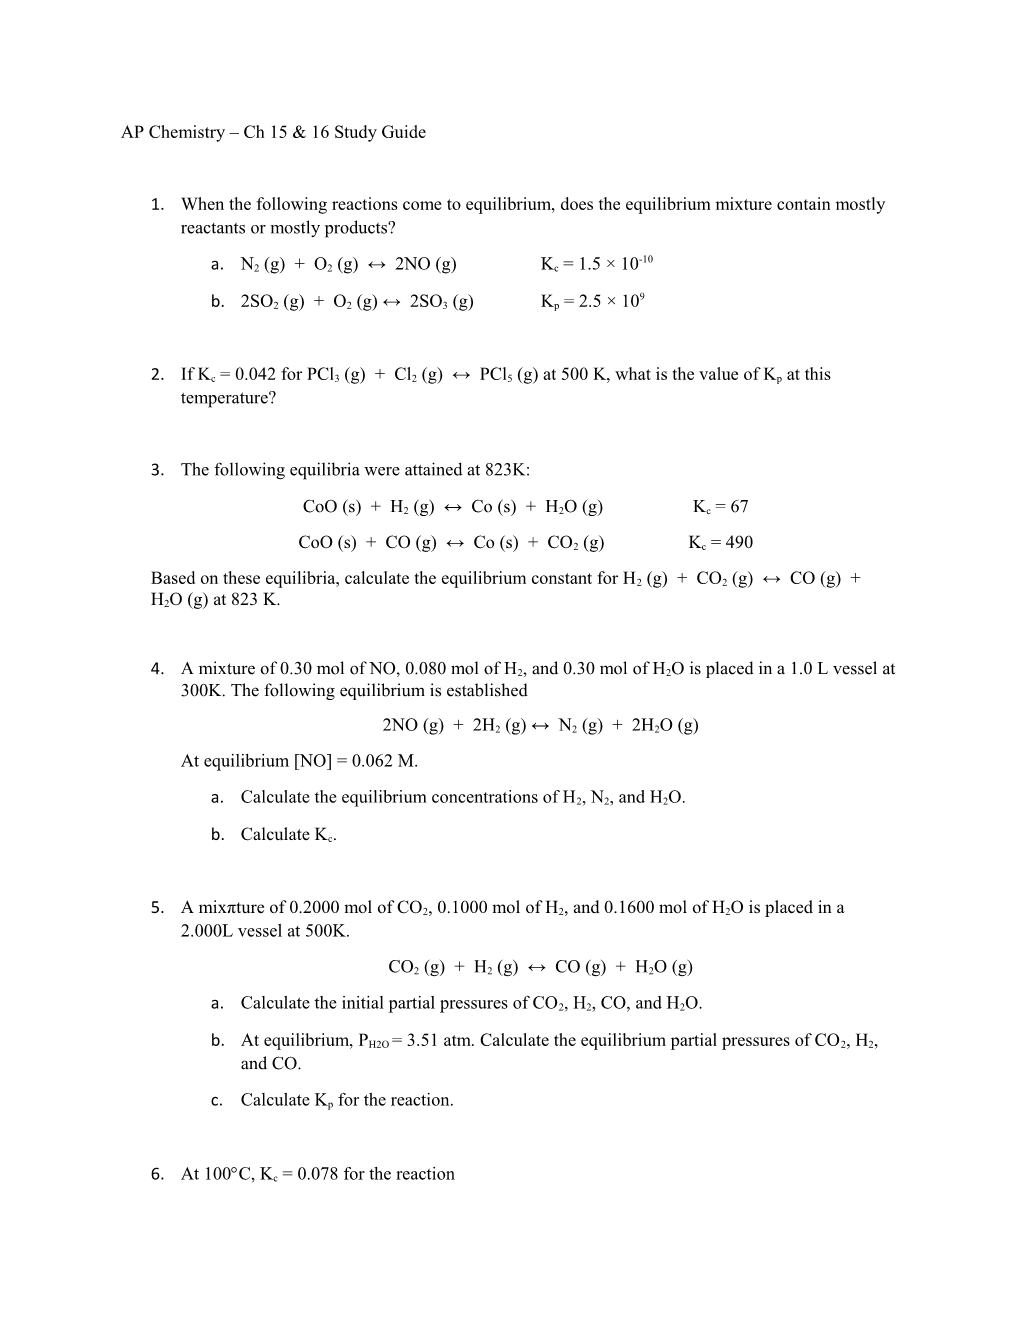 AP Chemistry Ch 15 & 16 Study Guide